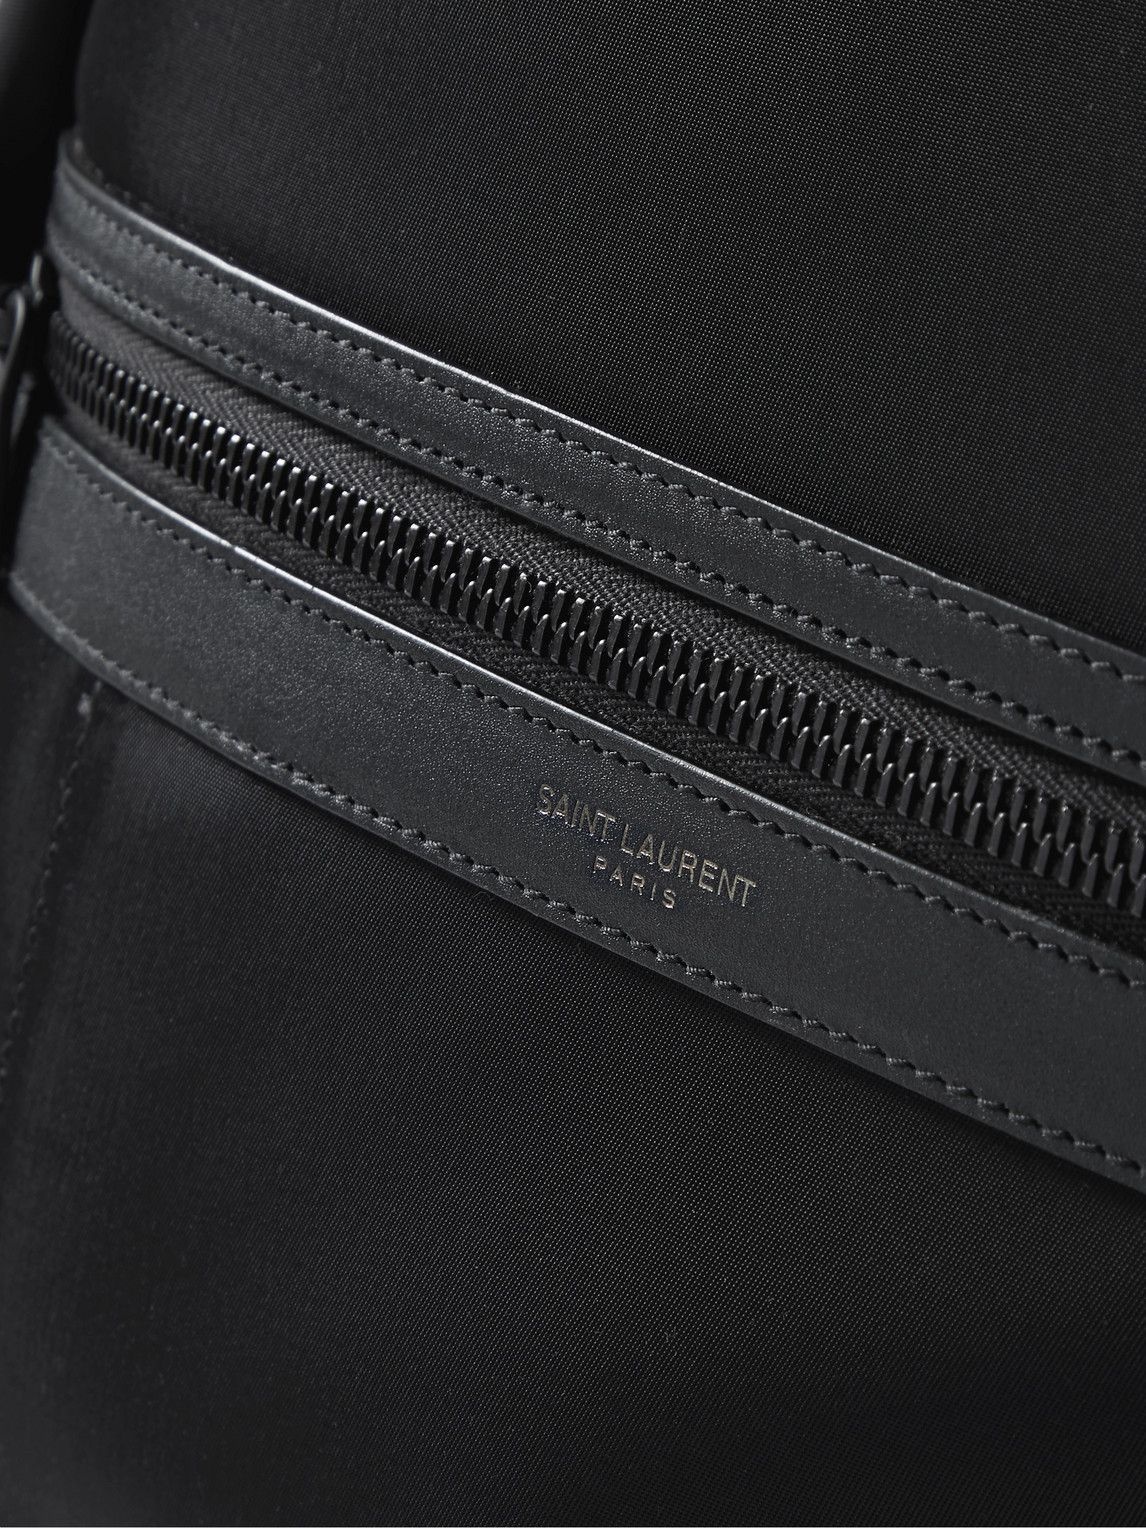 Saint Laurent Brand-embroidered Shell Backpack in Black for Men